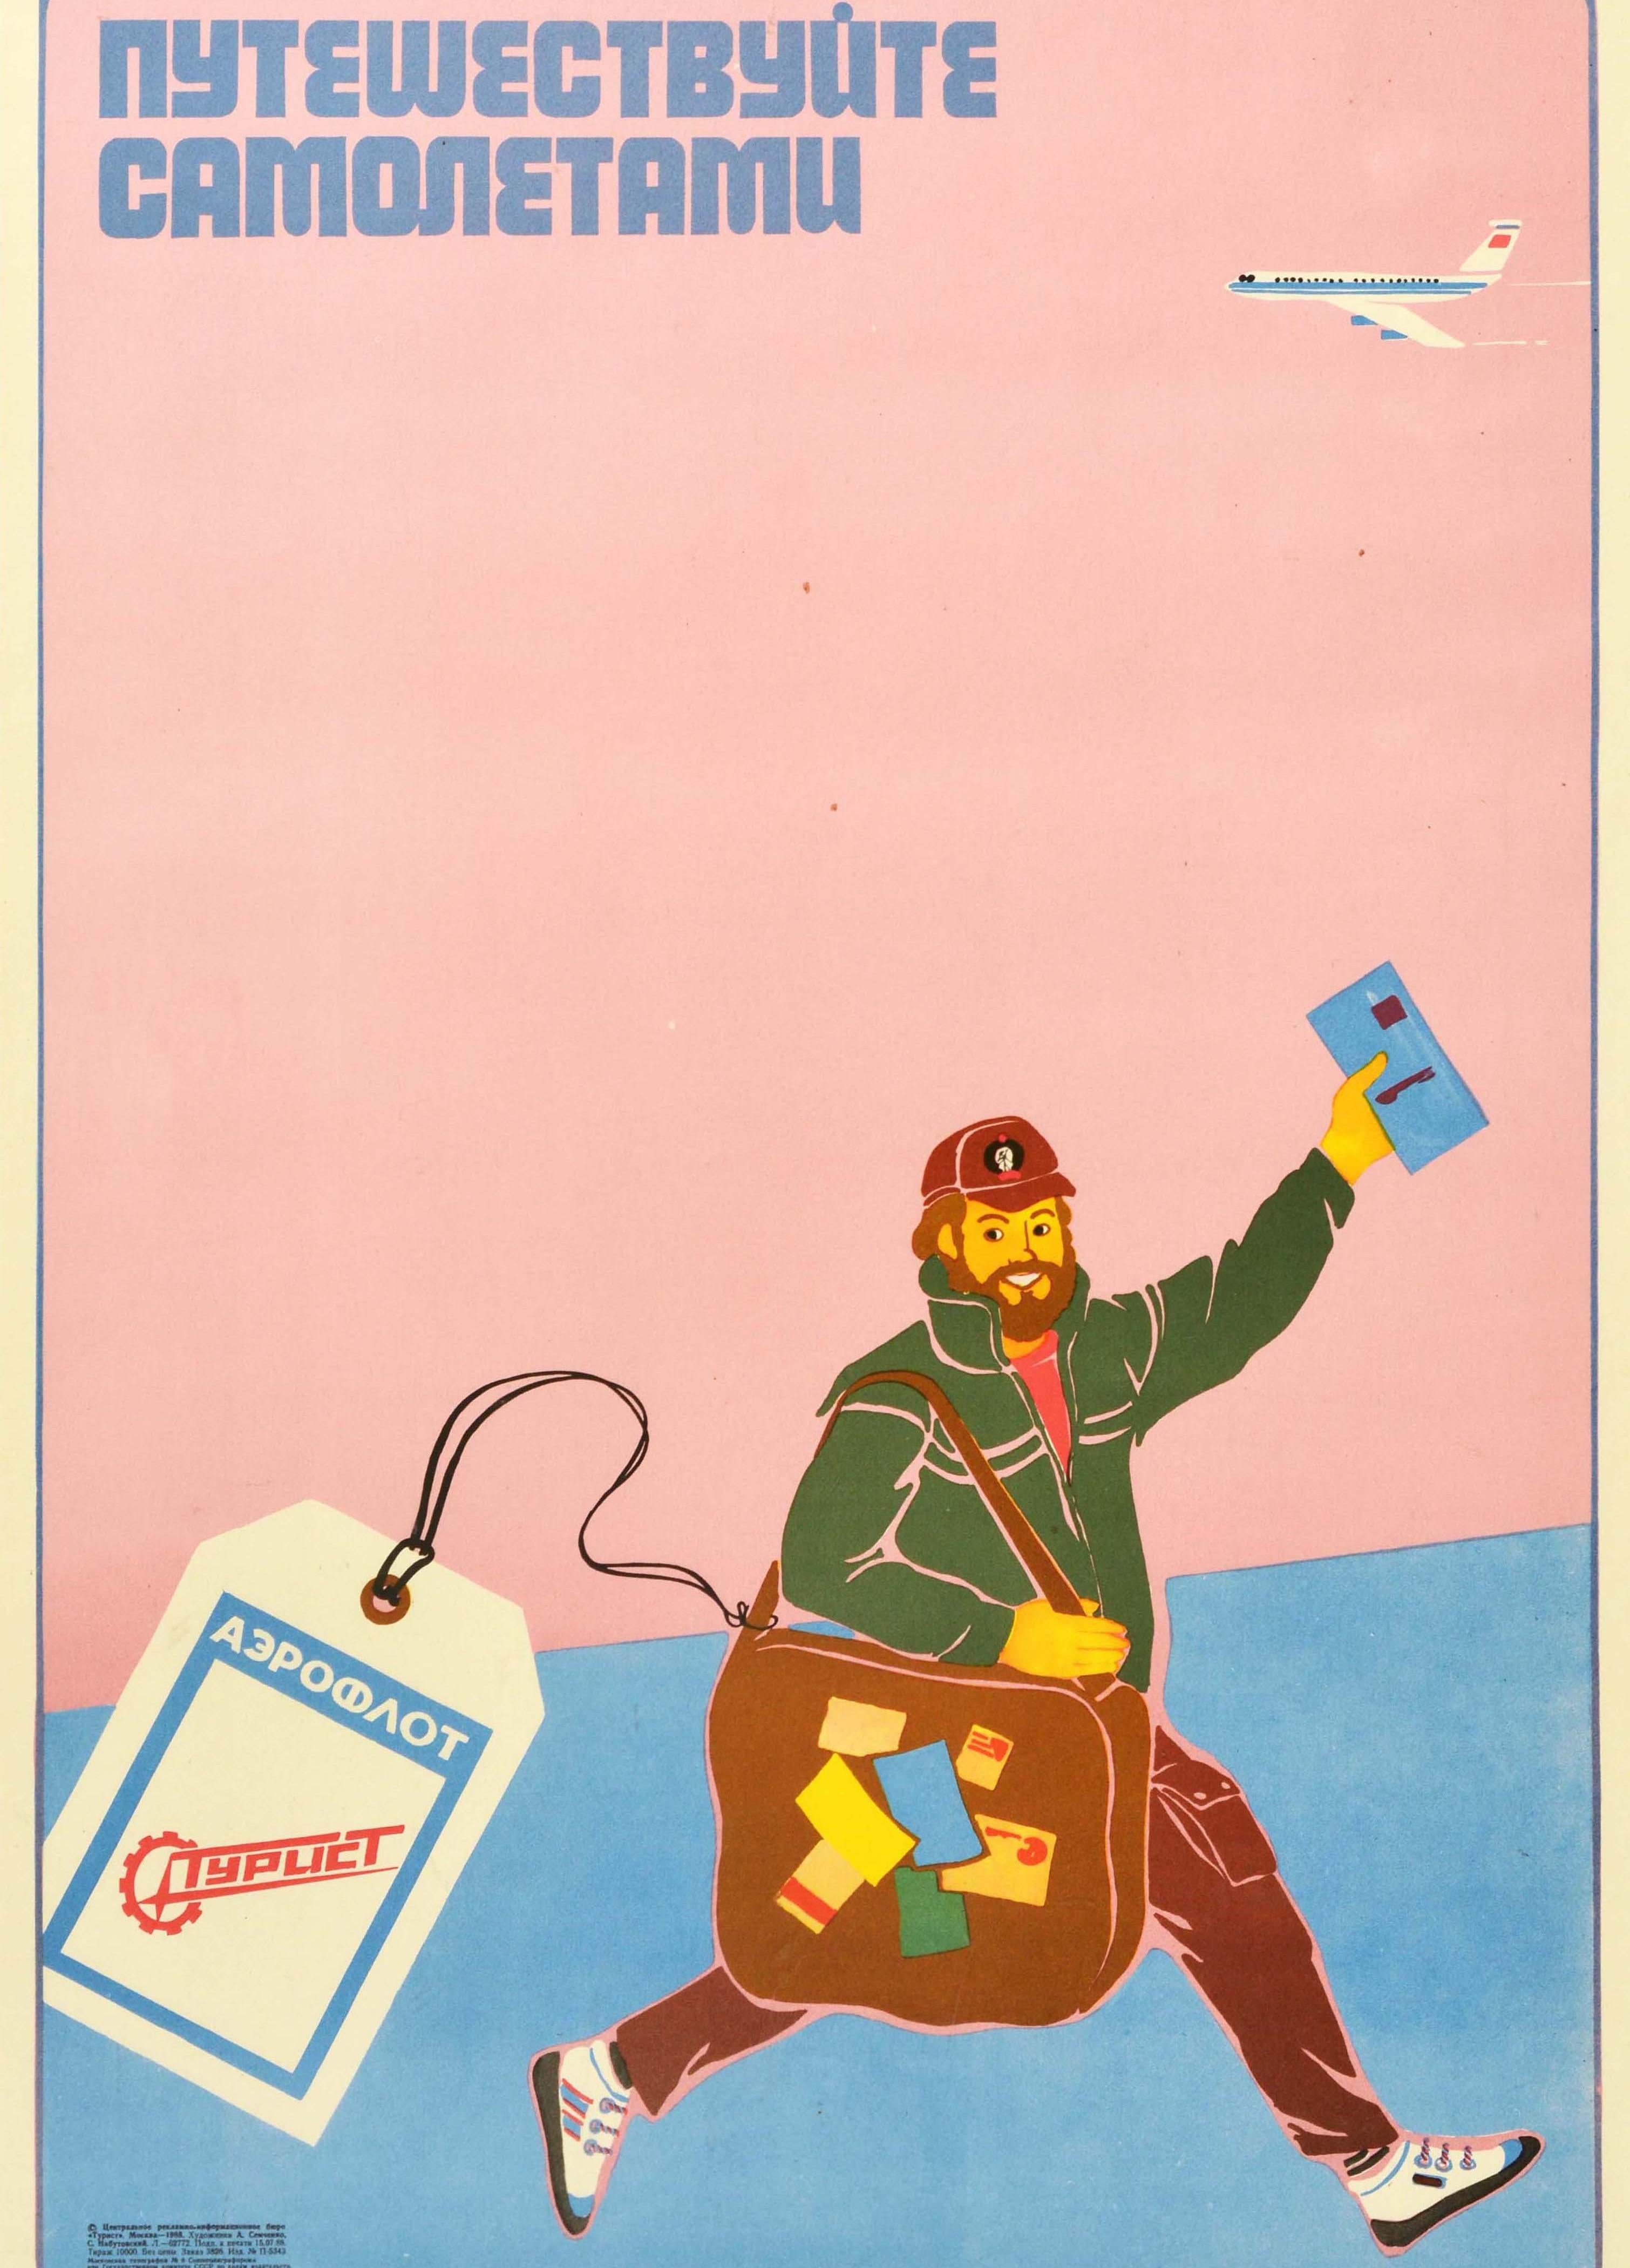 aeroflot poster